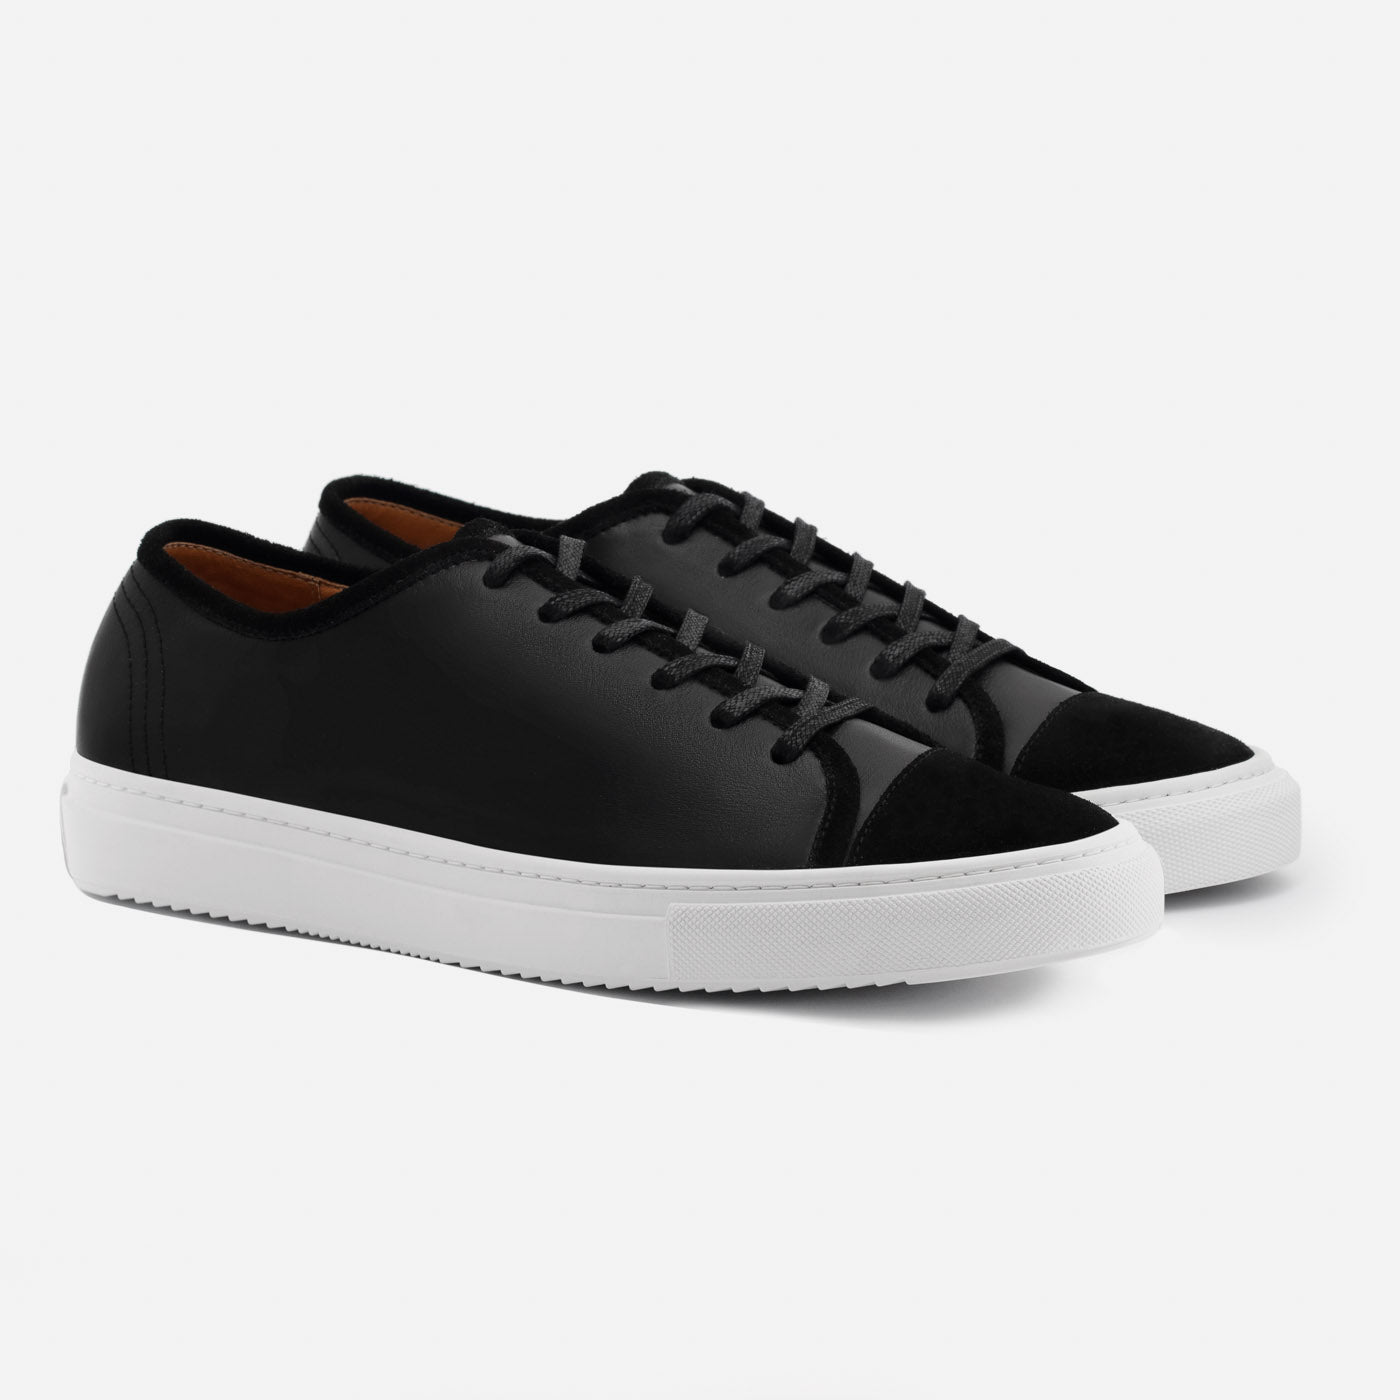 Prieto Sneakers - Leather/Suede - Men's